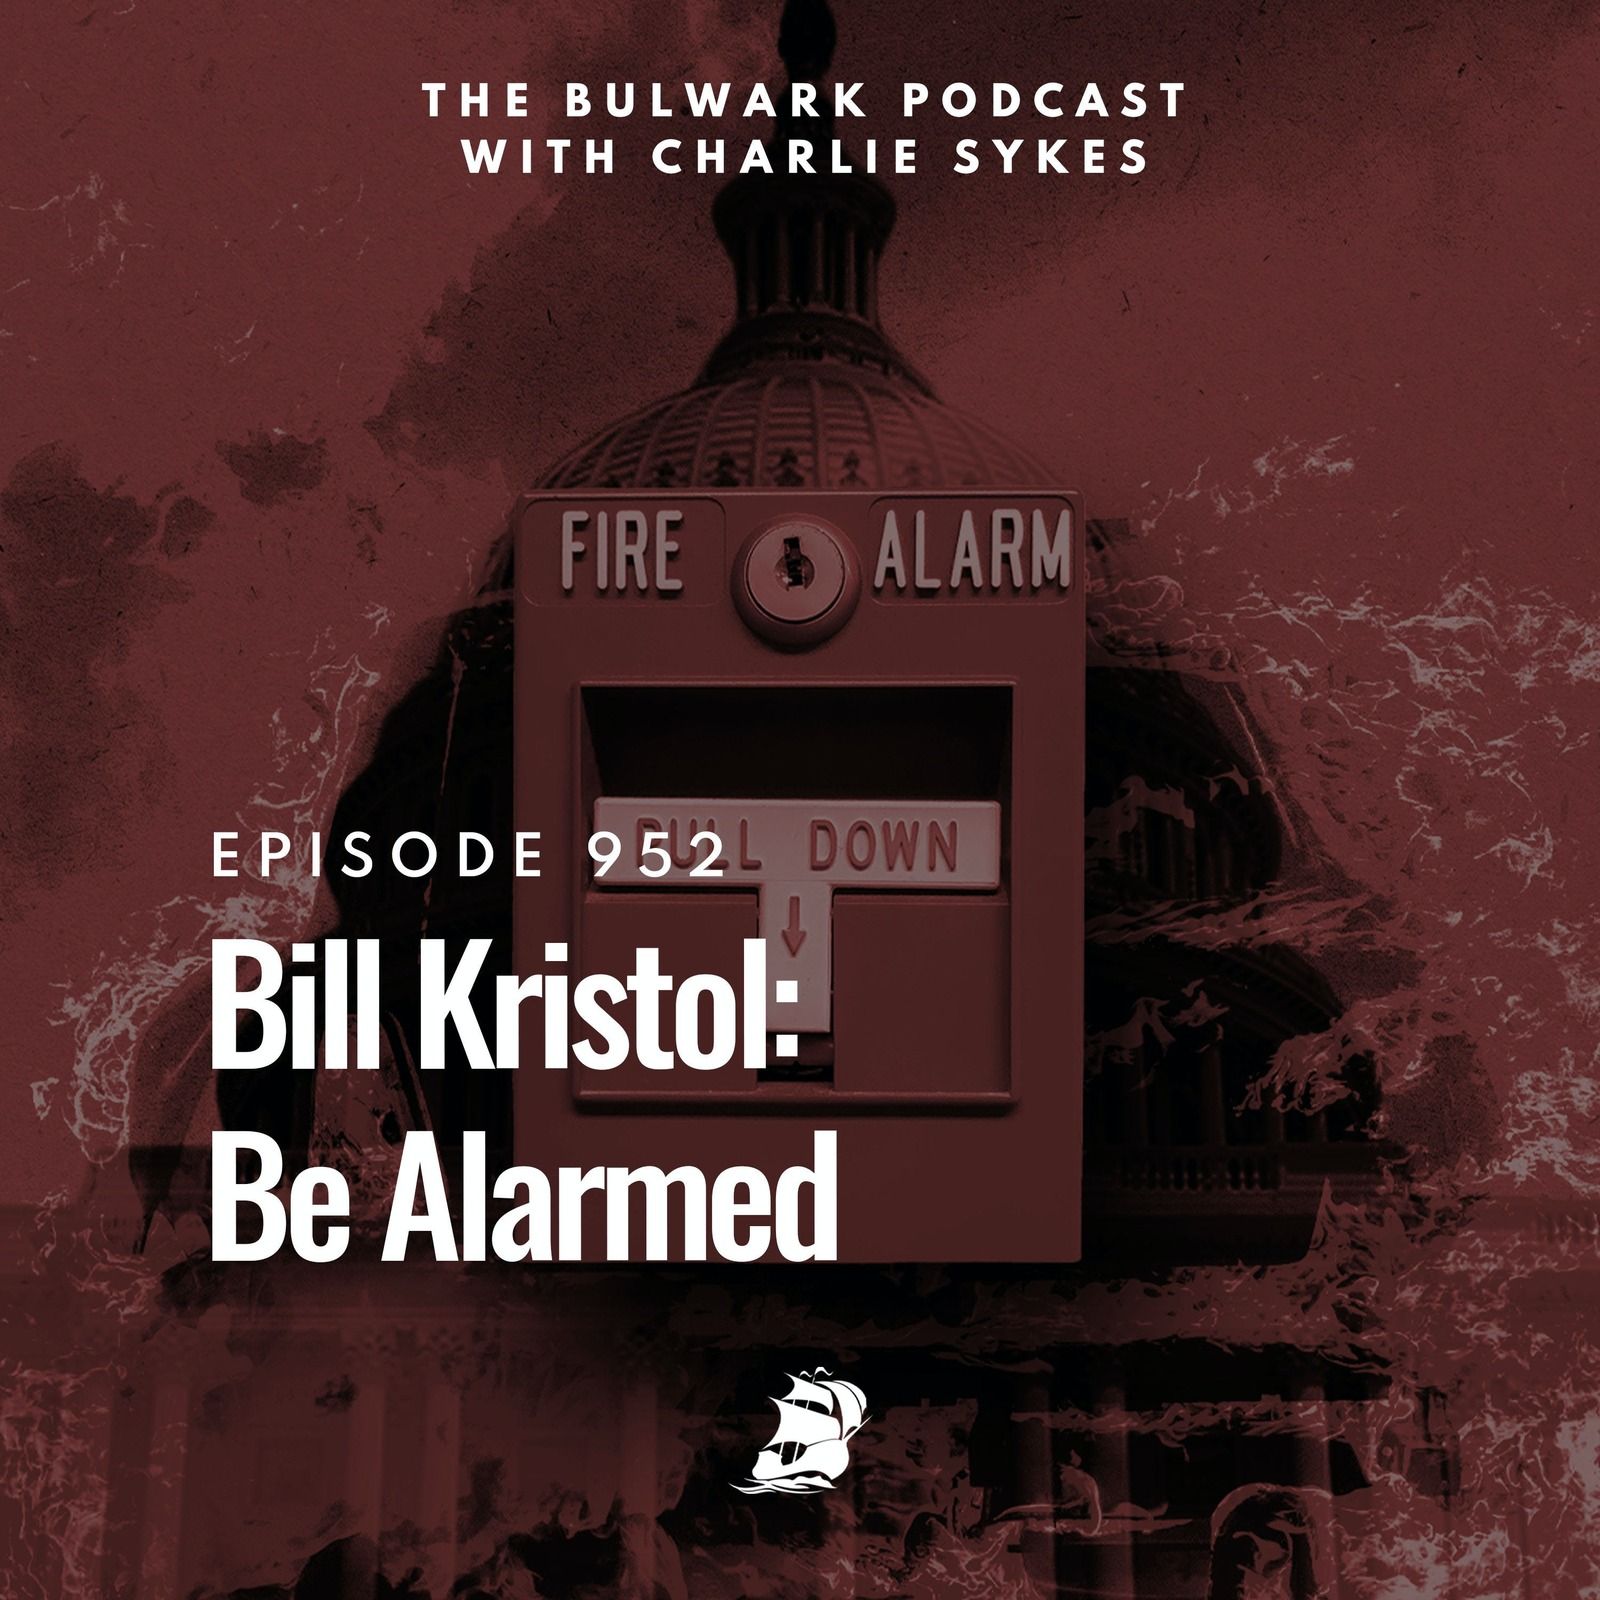 Bill Kristol: Be Alarmed by The Bulwark Podcast